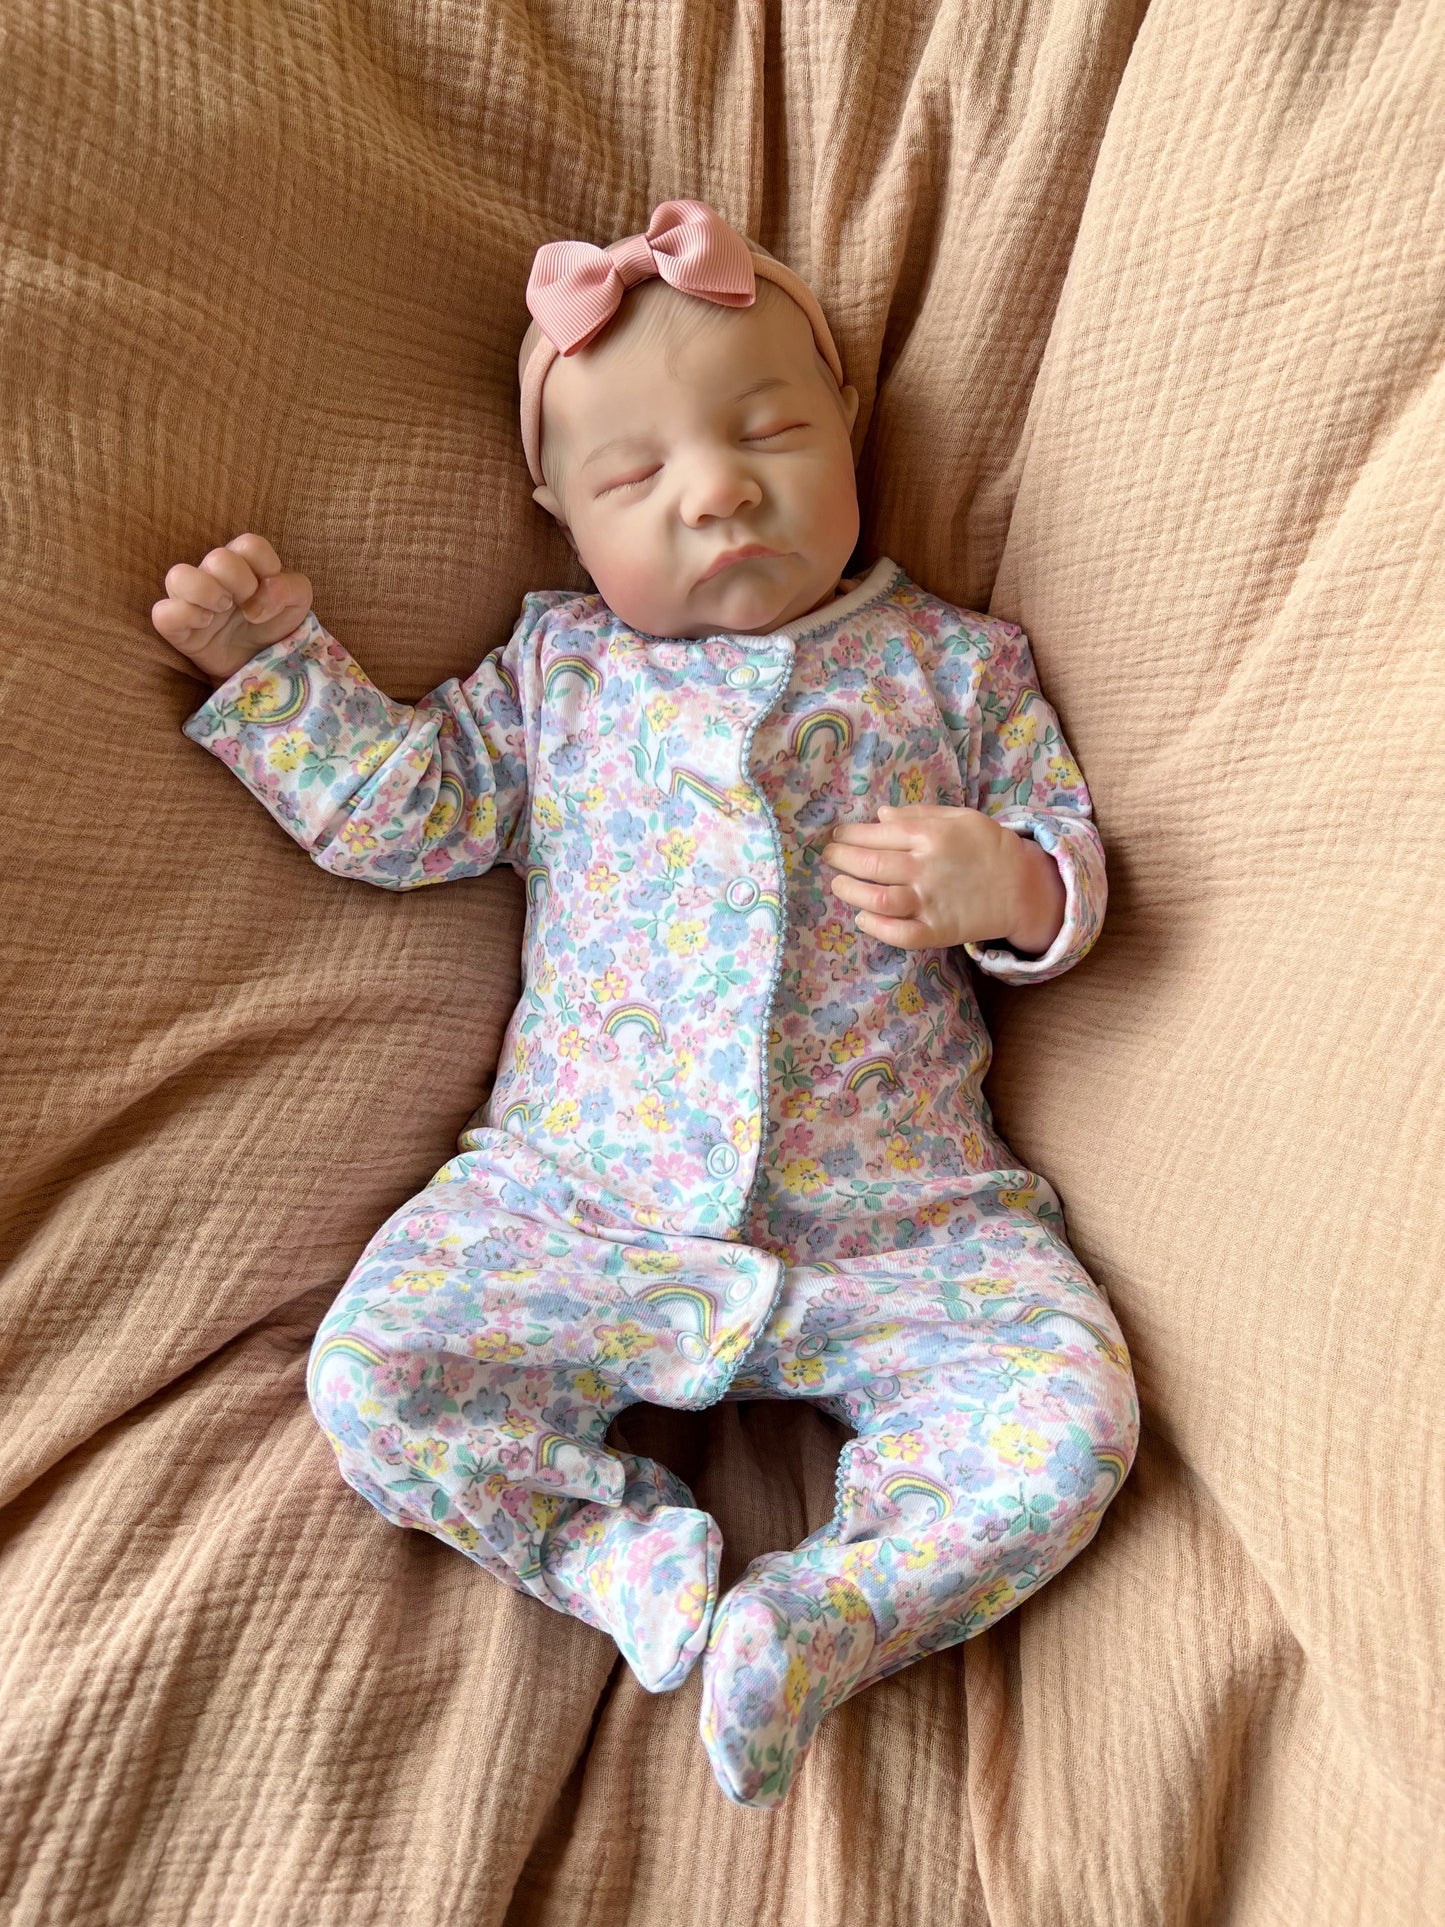 UK SELLER 19” Newborn Reborn Baby Girl Doll Lacey